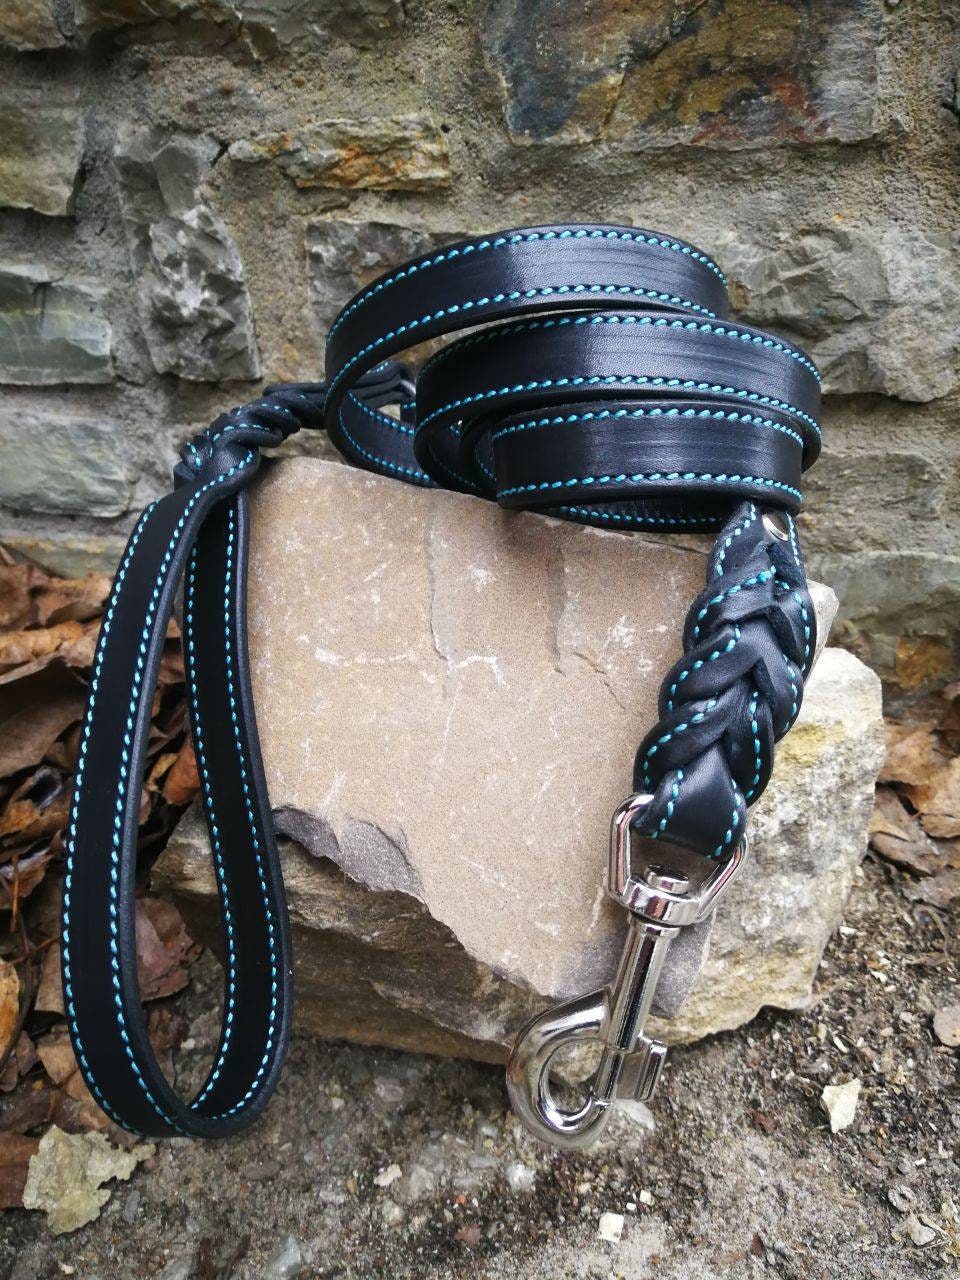 Braided Ends Leather Dog Leash with Ring on Handle. Free Hands Leather Braided Leash for Big and Medium Dog, Leather Stitched Dog Leash,